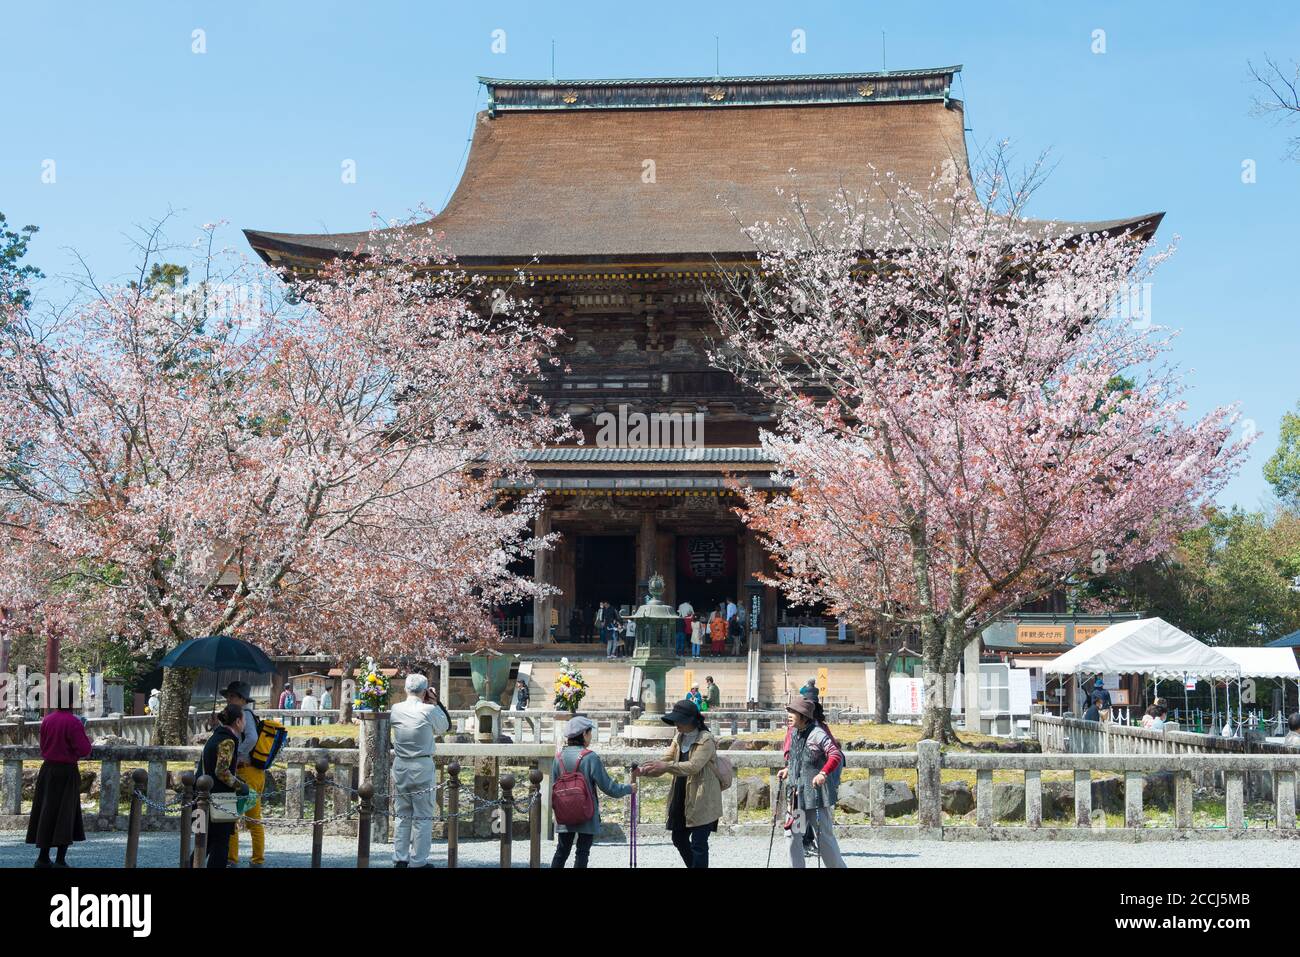 Kimpusen-ji Temple in Yoshino, Nara, Japan. It is part of UNESCO World Heritage Site - Sacred Sites and Pilgrimage Routes in the Kii Mountain Range. Stock Photo